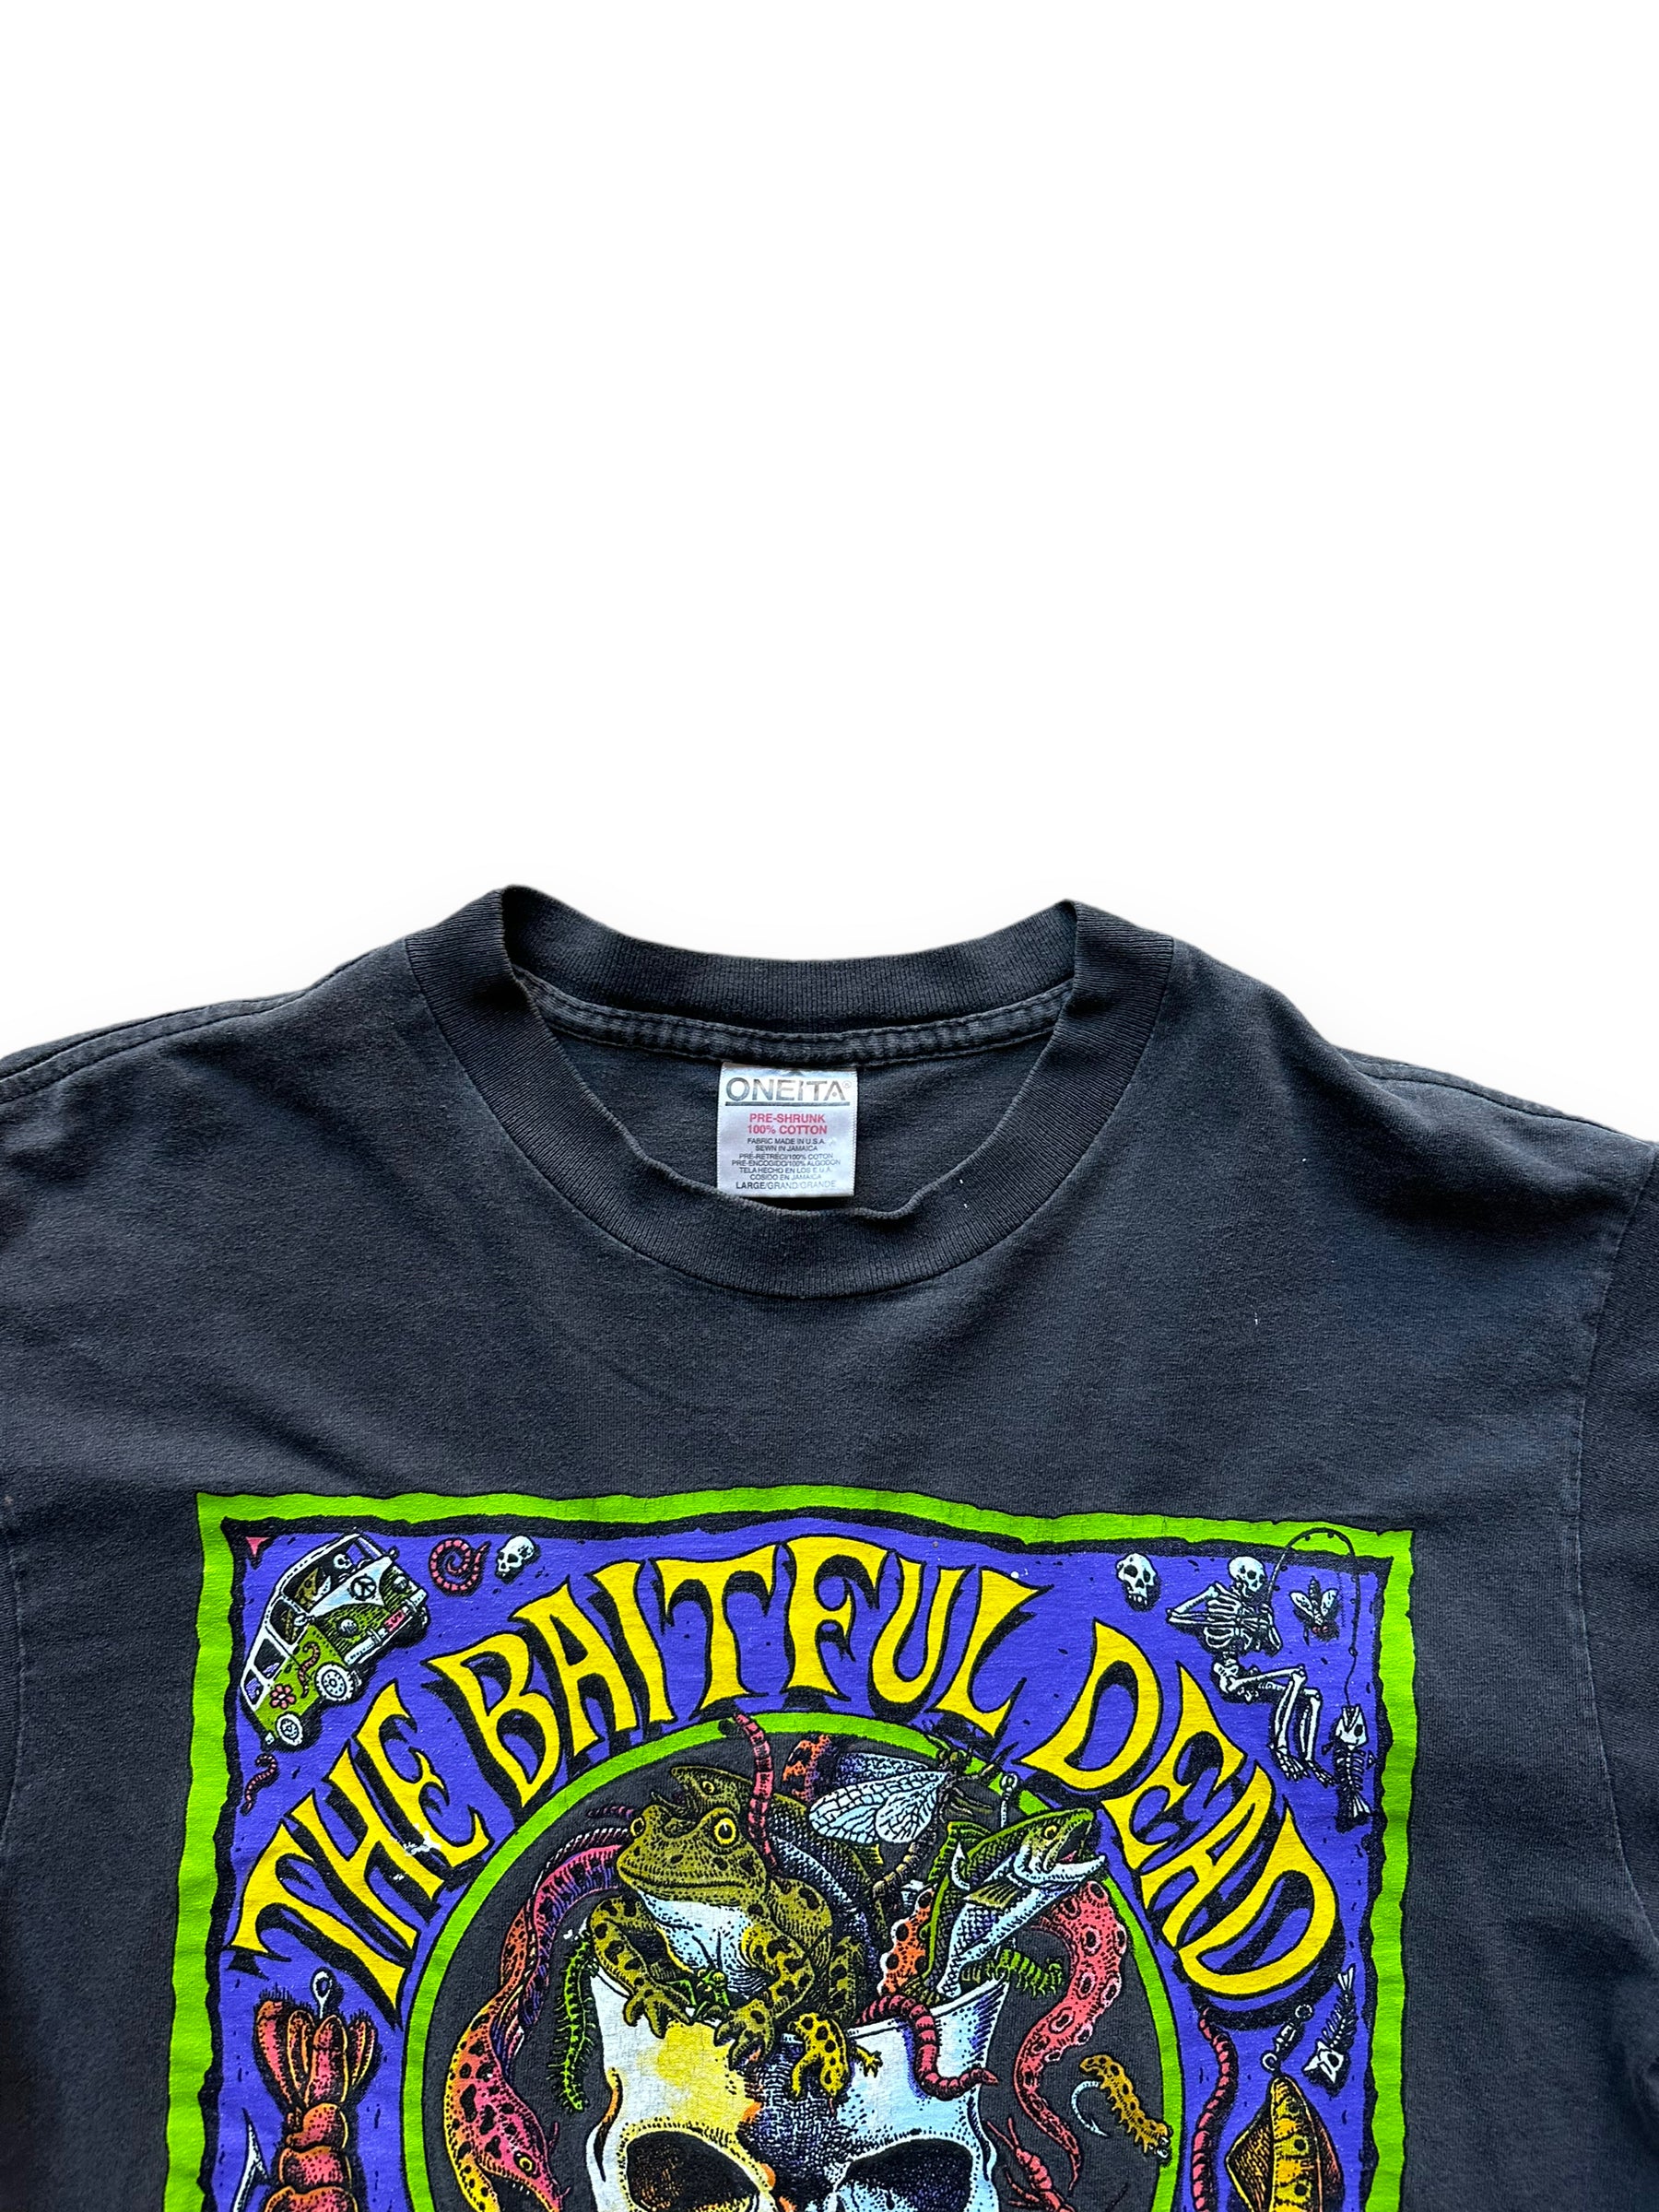 Collar of Vintage Ray Troll The Baitful Dead Tee SZ L |  Vintage Fishing Tee Seattle | Barn Owl Vintage